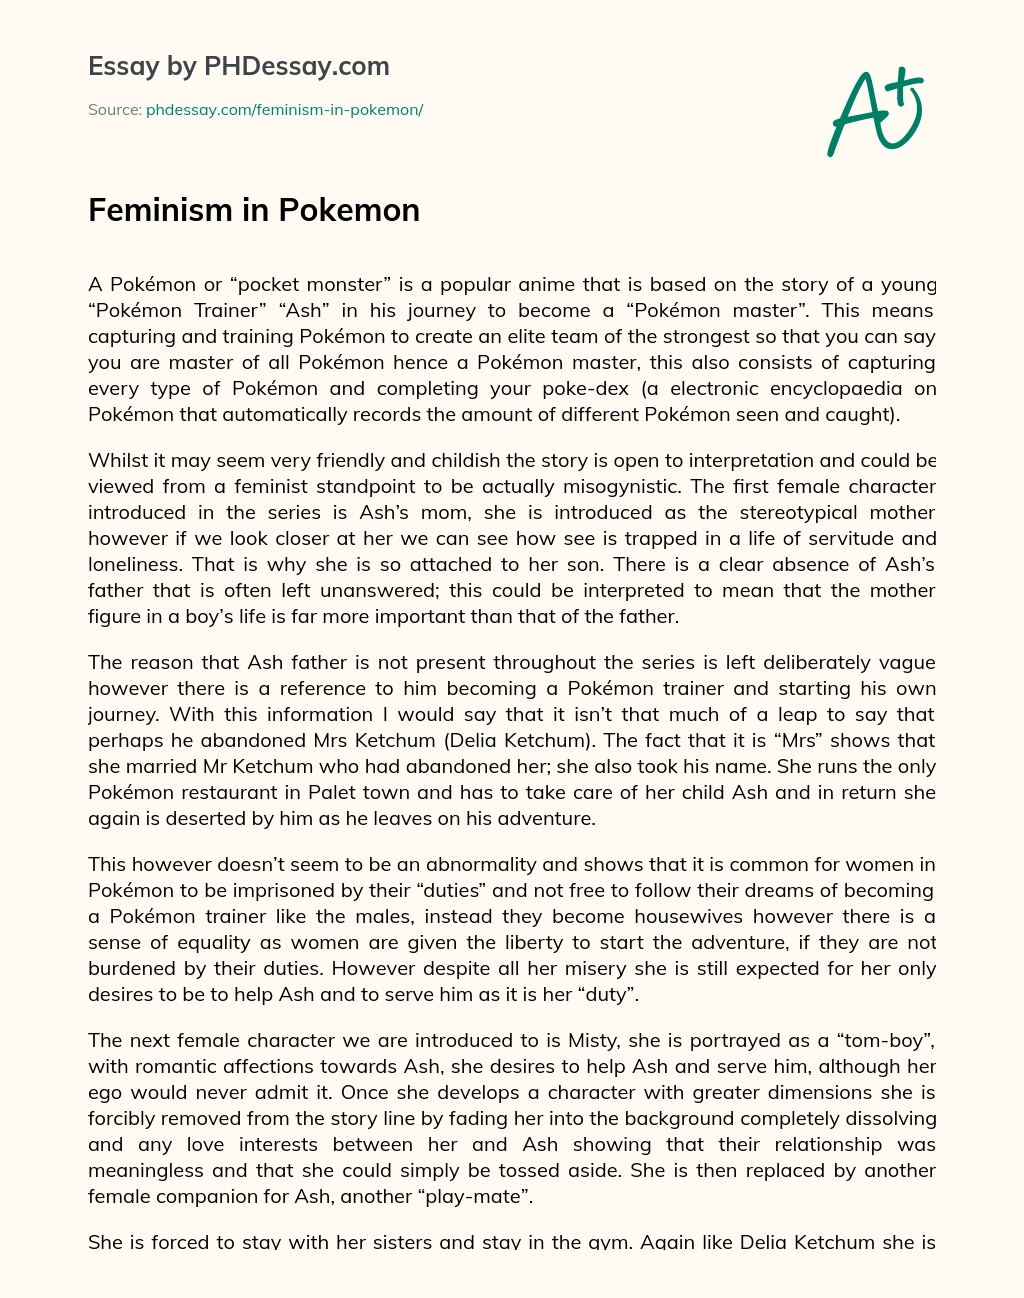 Feminism in Pokemon essay